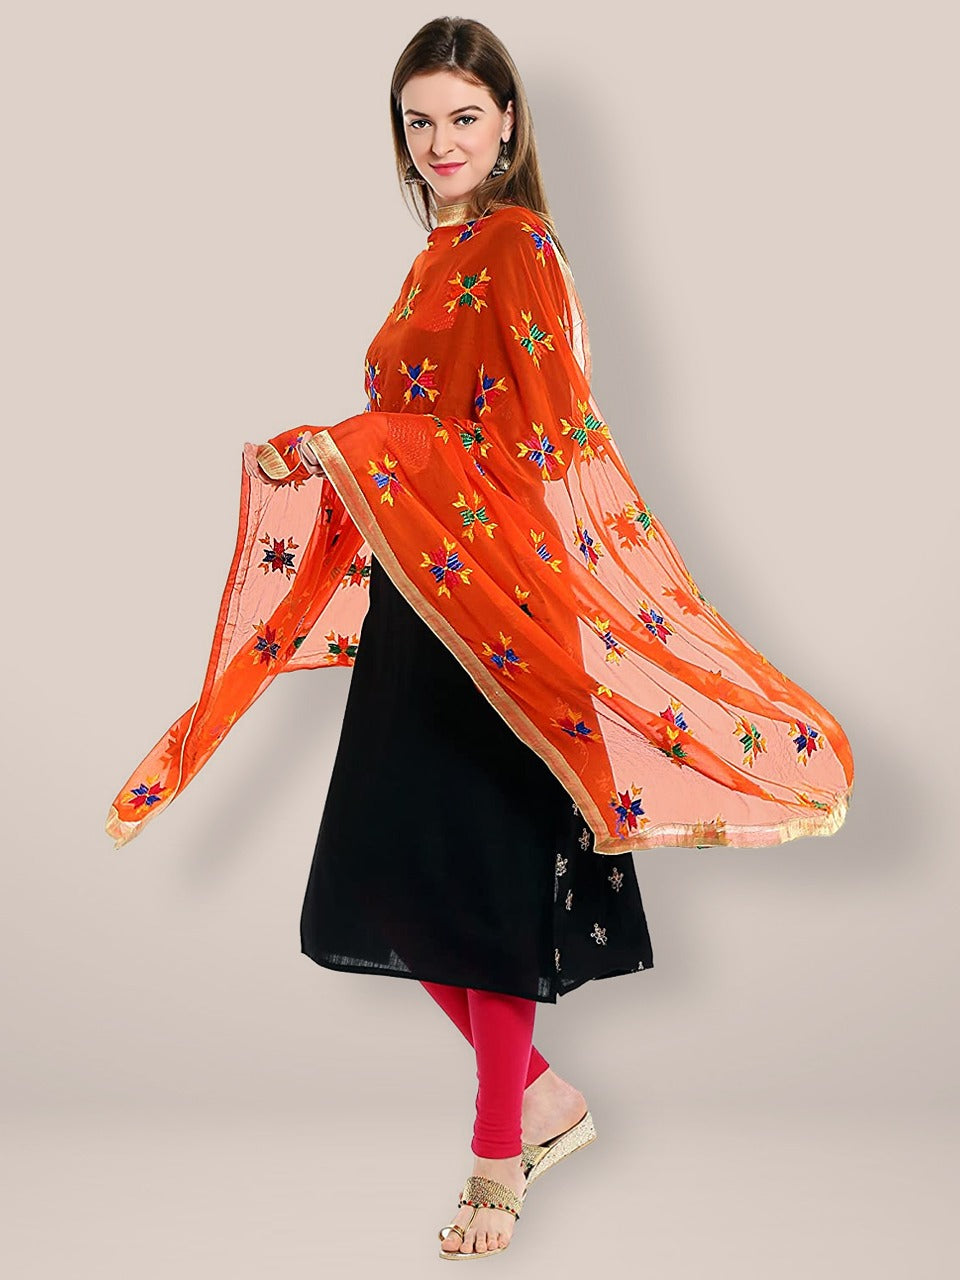 Bhelpuri Black Satin Georgette Designer Party Wear Salwar Suit With Dupatta,  Georgette Salwar Suits, जोर्जेट सलवार कमीज - Admyrin E Com Services, Surat  | ID: 27027190597